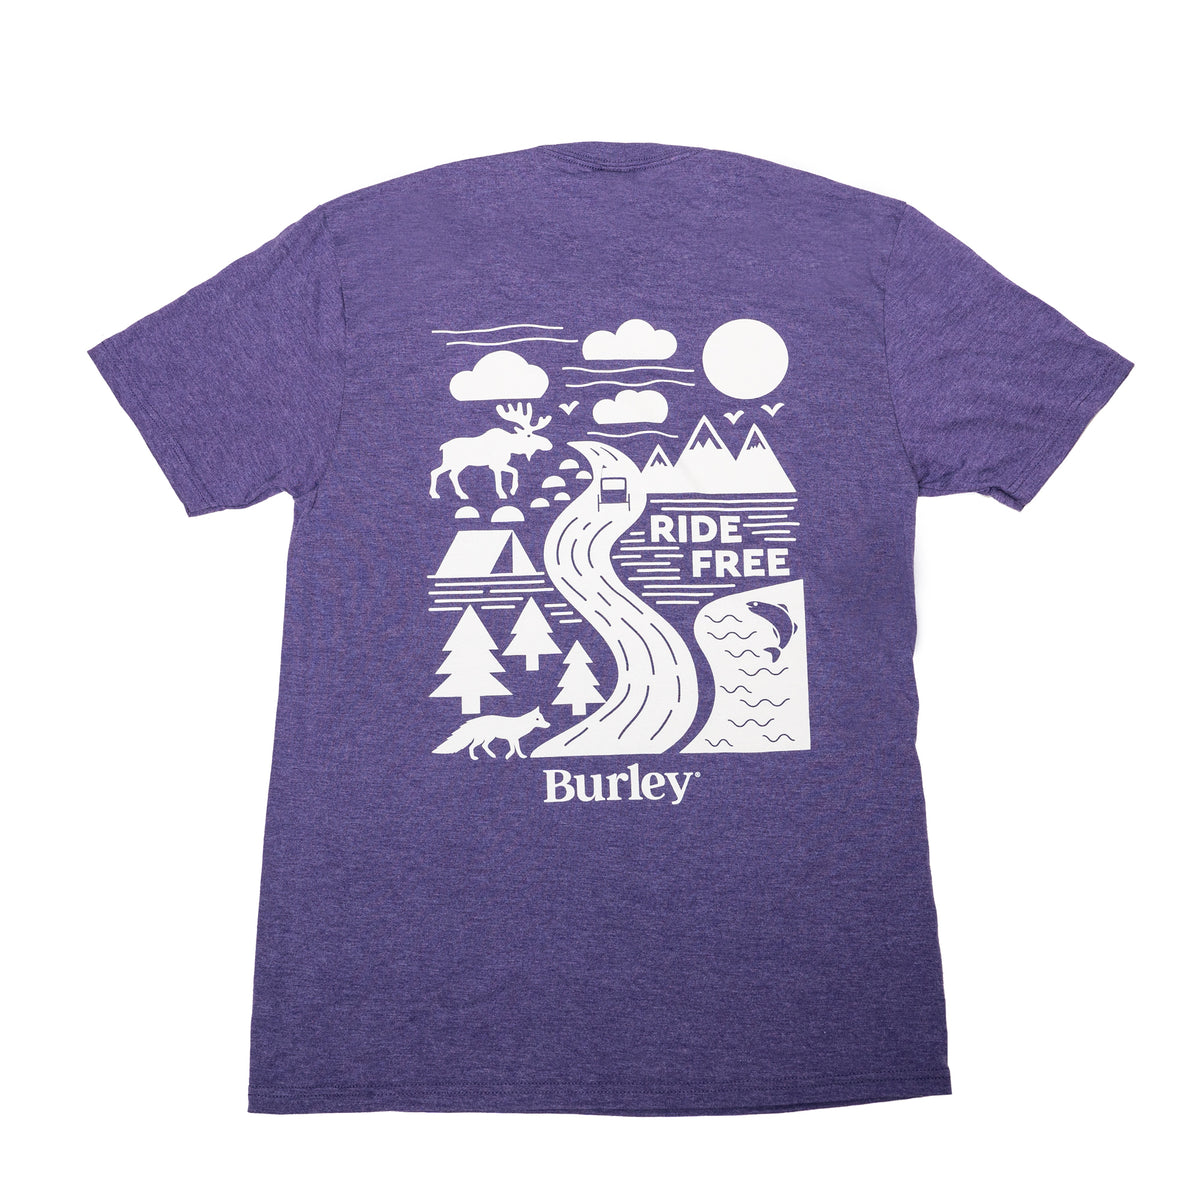 Burley Ride Free Shirt, Purple